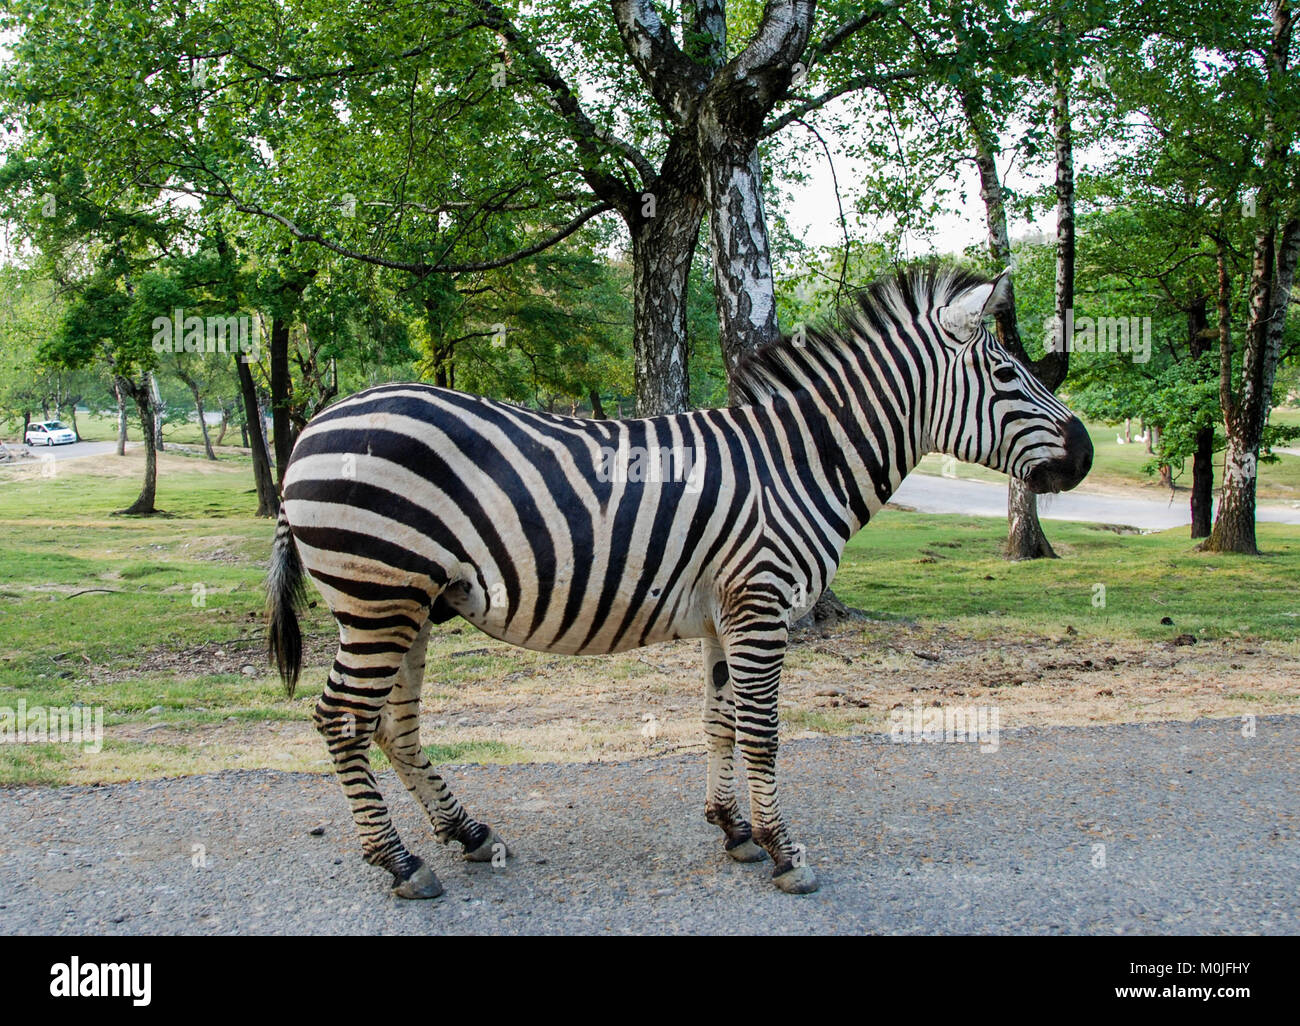 Una zebra in un parco. Immagine completa Foto Stock